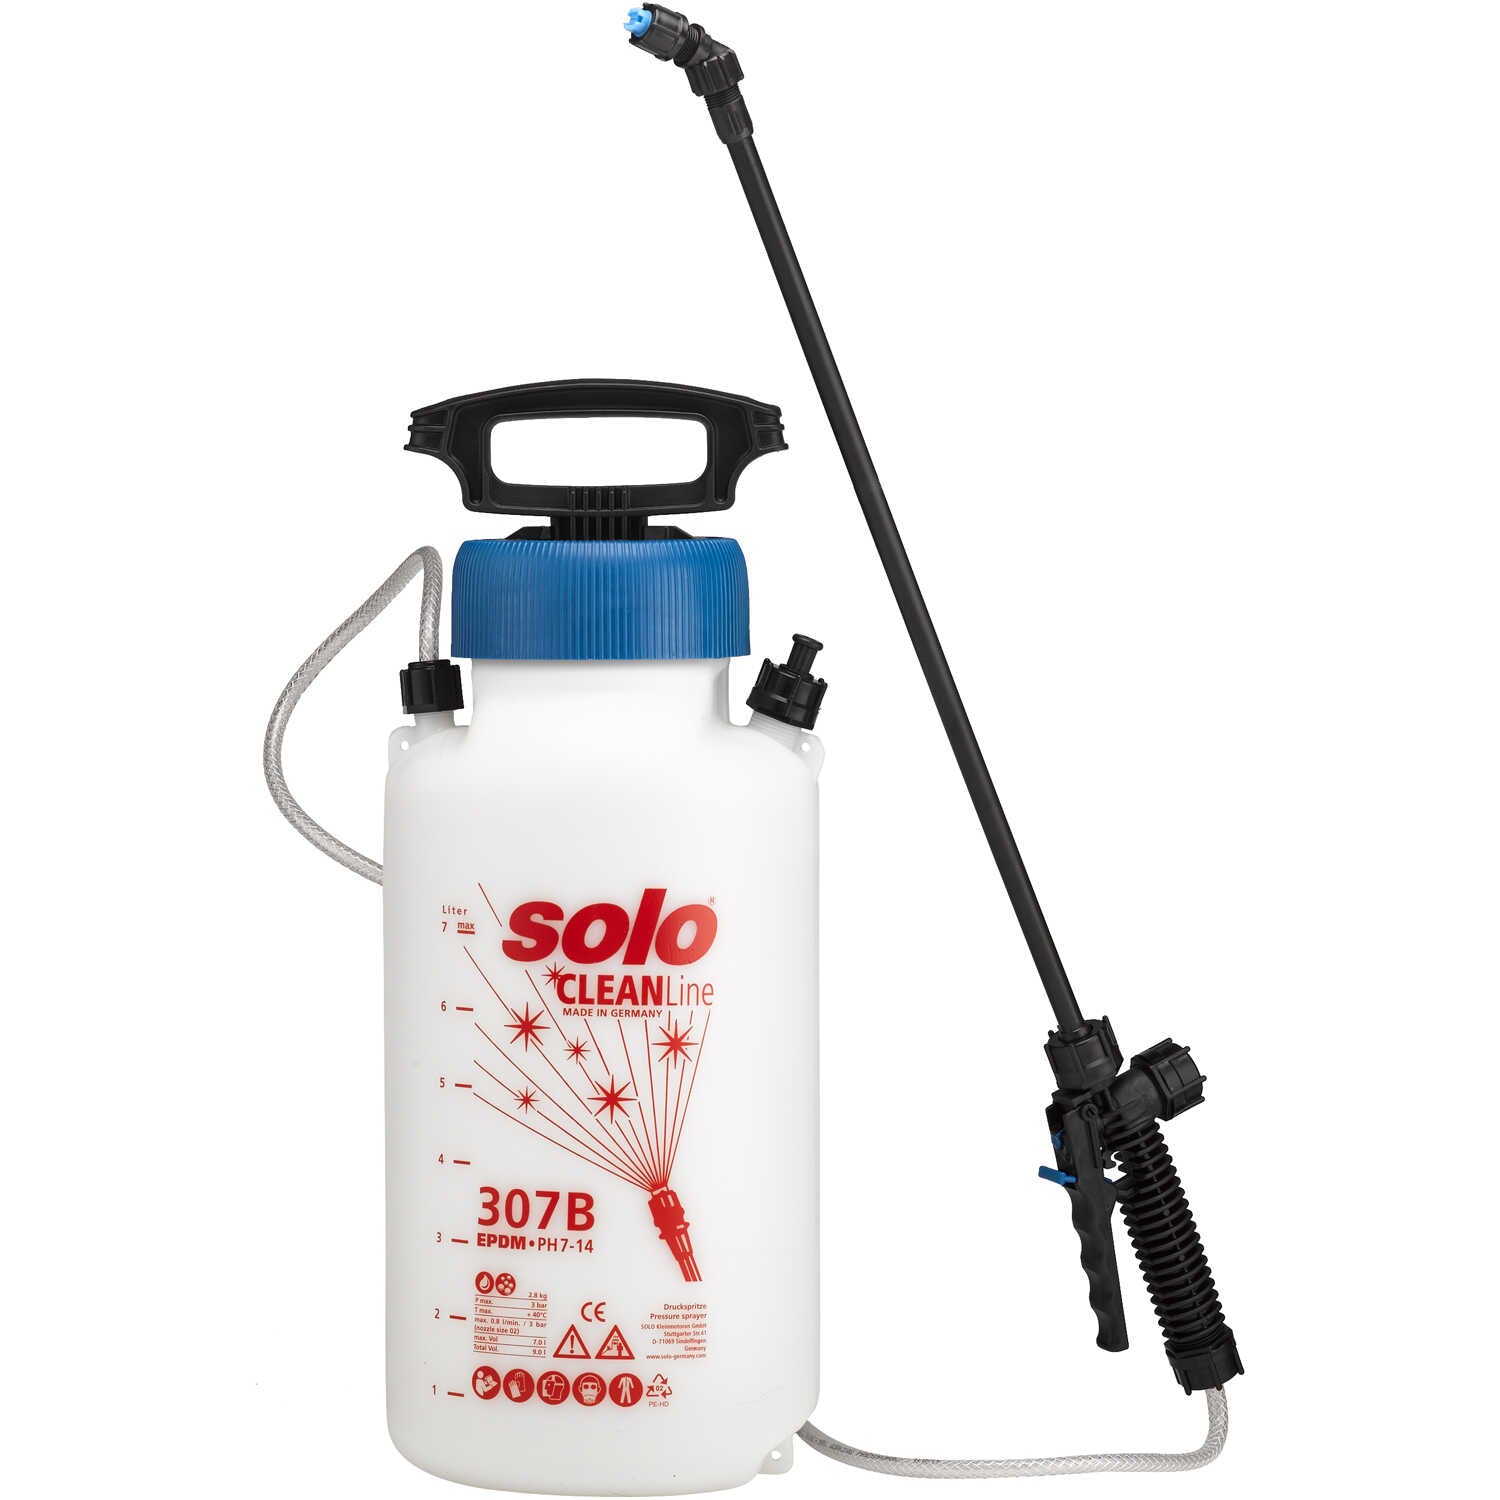 Pump Sprayer Solvent Stainless Steel 2 Gallon